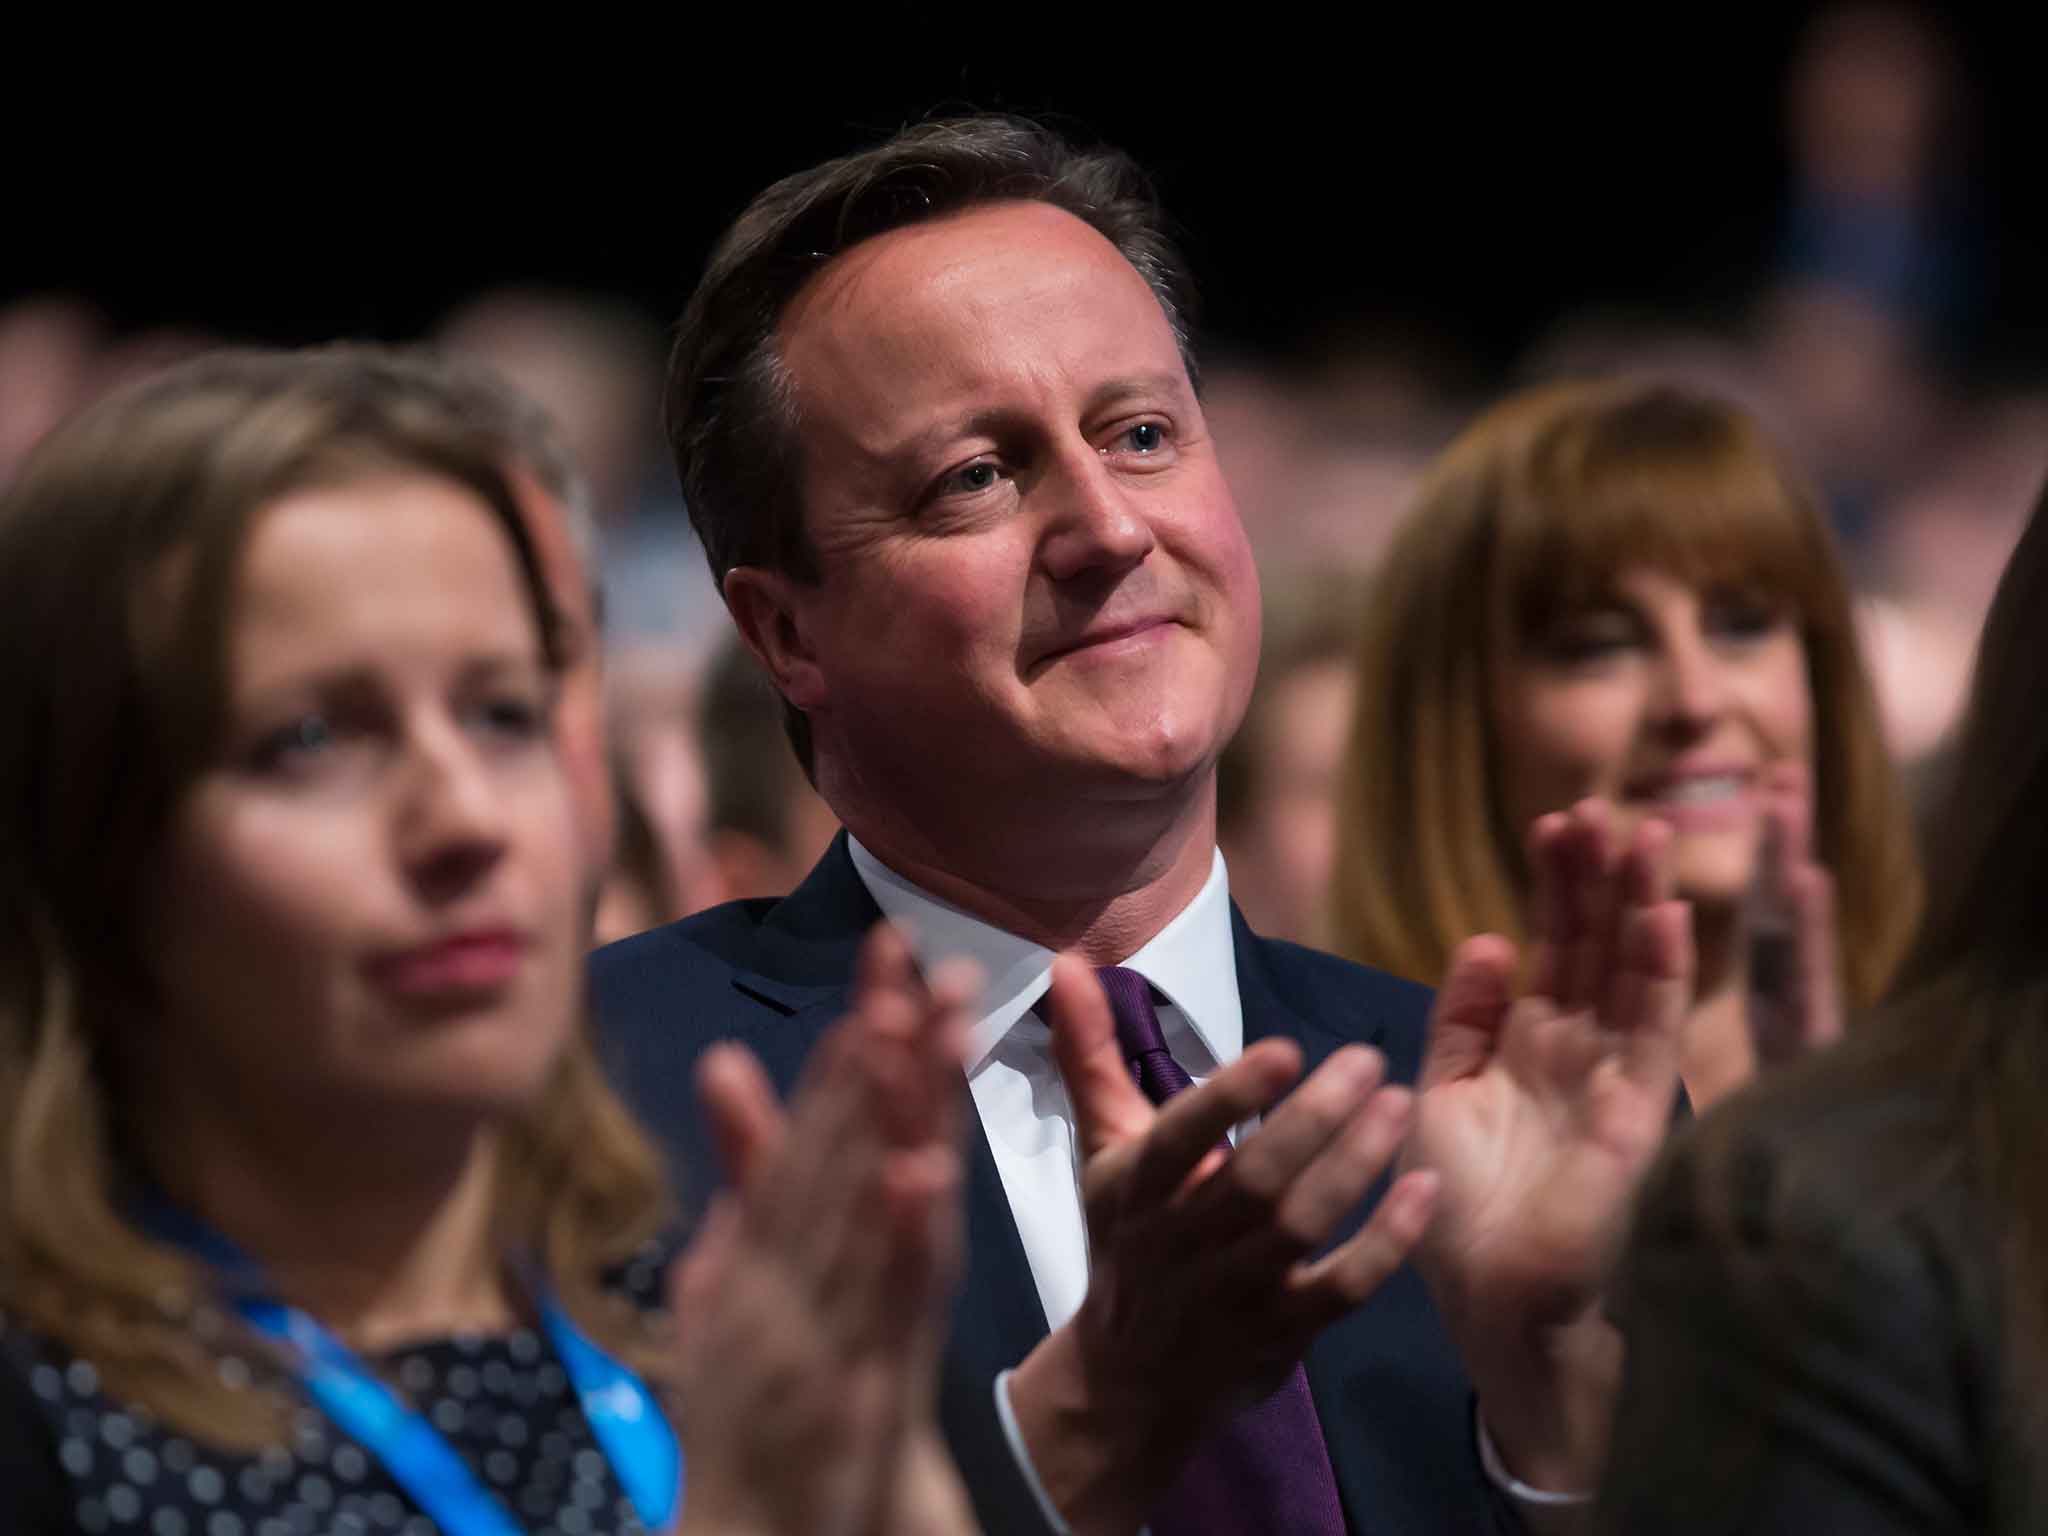 David Cameron applauds after listening to George Osborne's speech